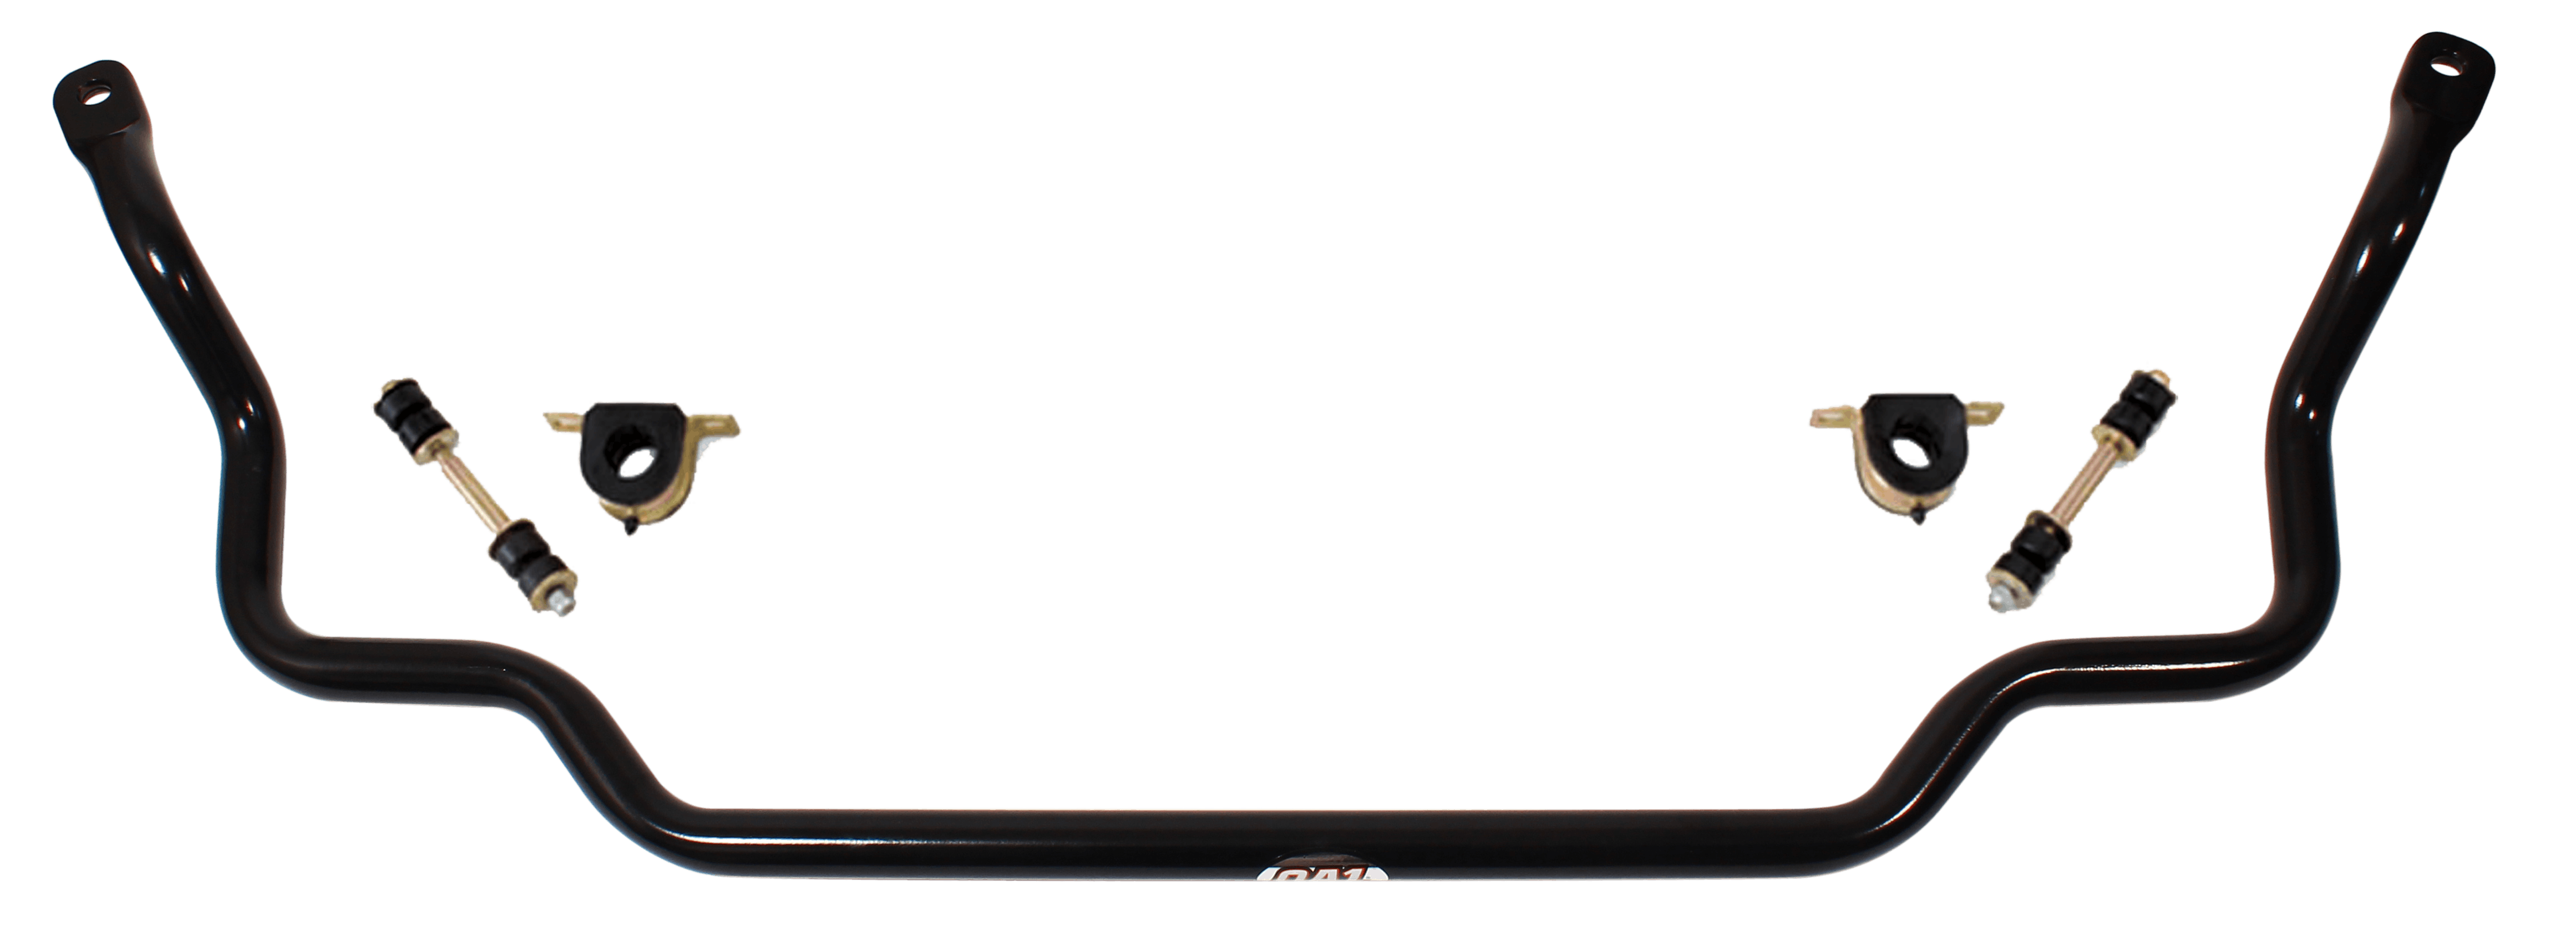 QA1 52870 Sway Bar Kit, Front 1-1/4 inch 64-72 Gm A-Body